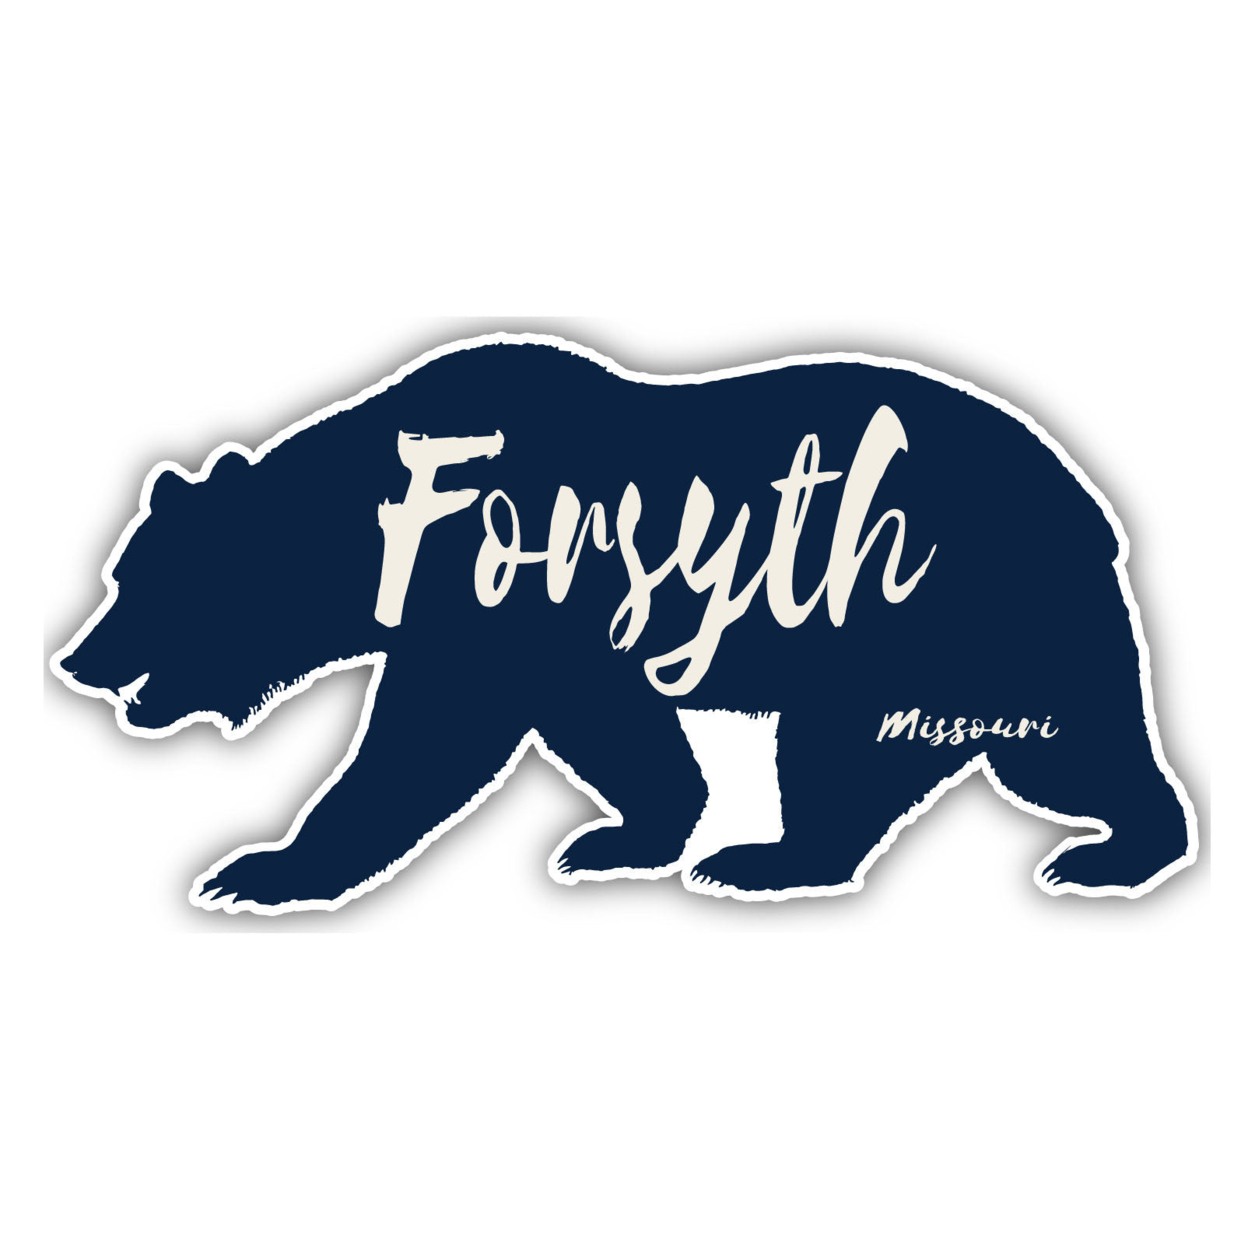 Forsyth Missouri Souvenir Decorative Stickers (Choose Theme And Size) - Single Unit, 12-Inch, Bear